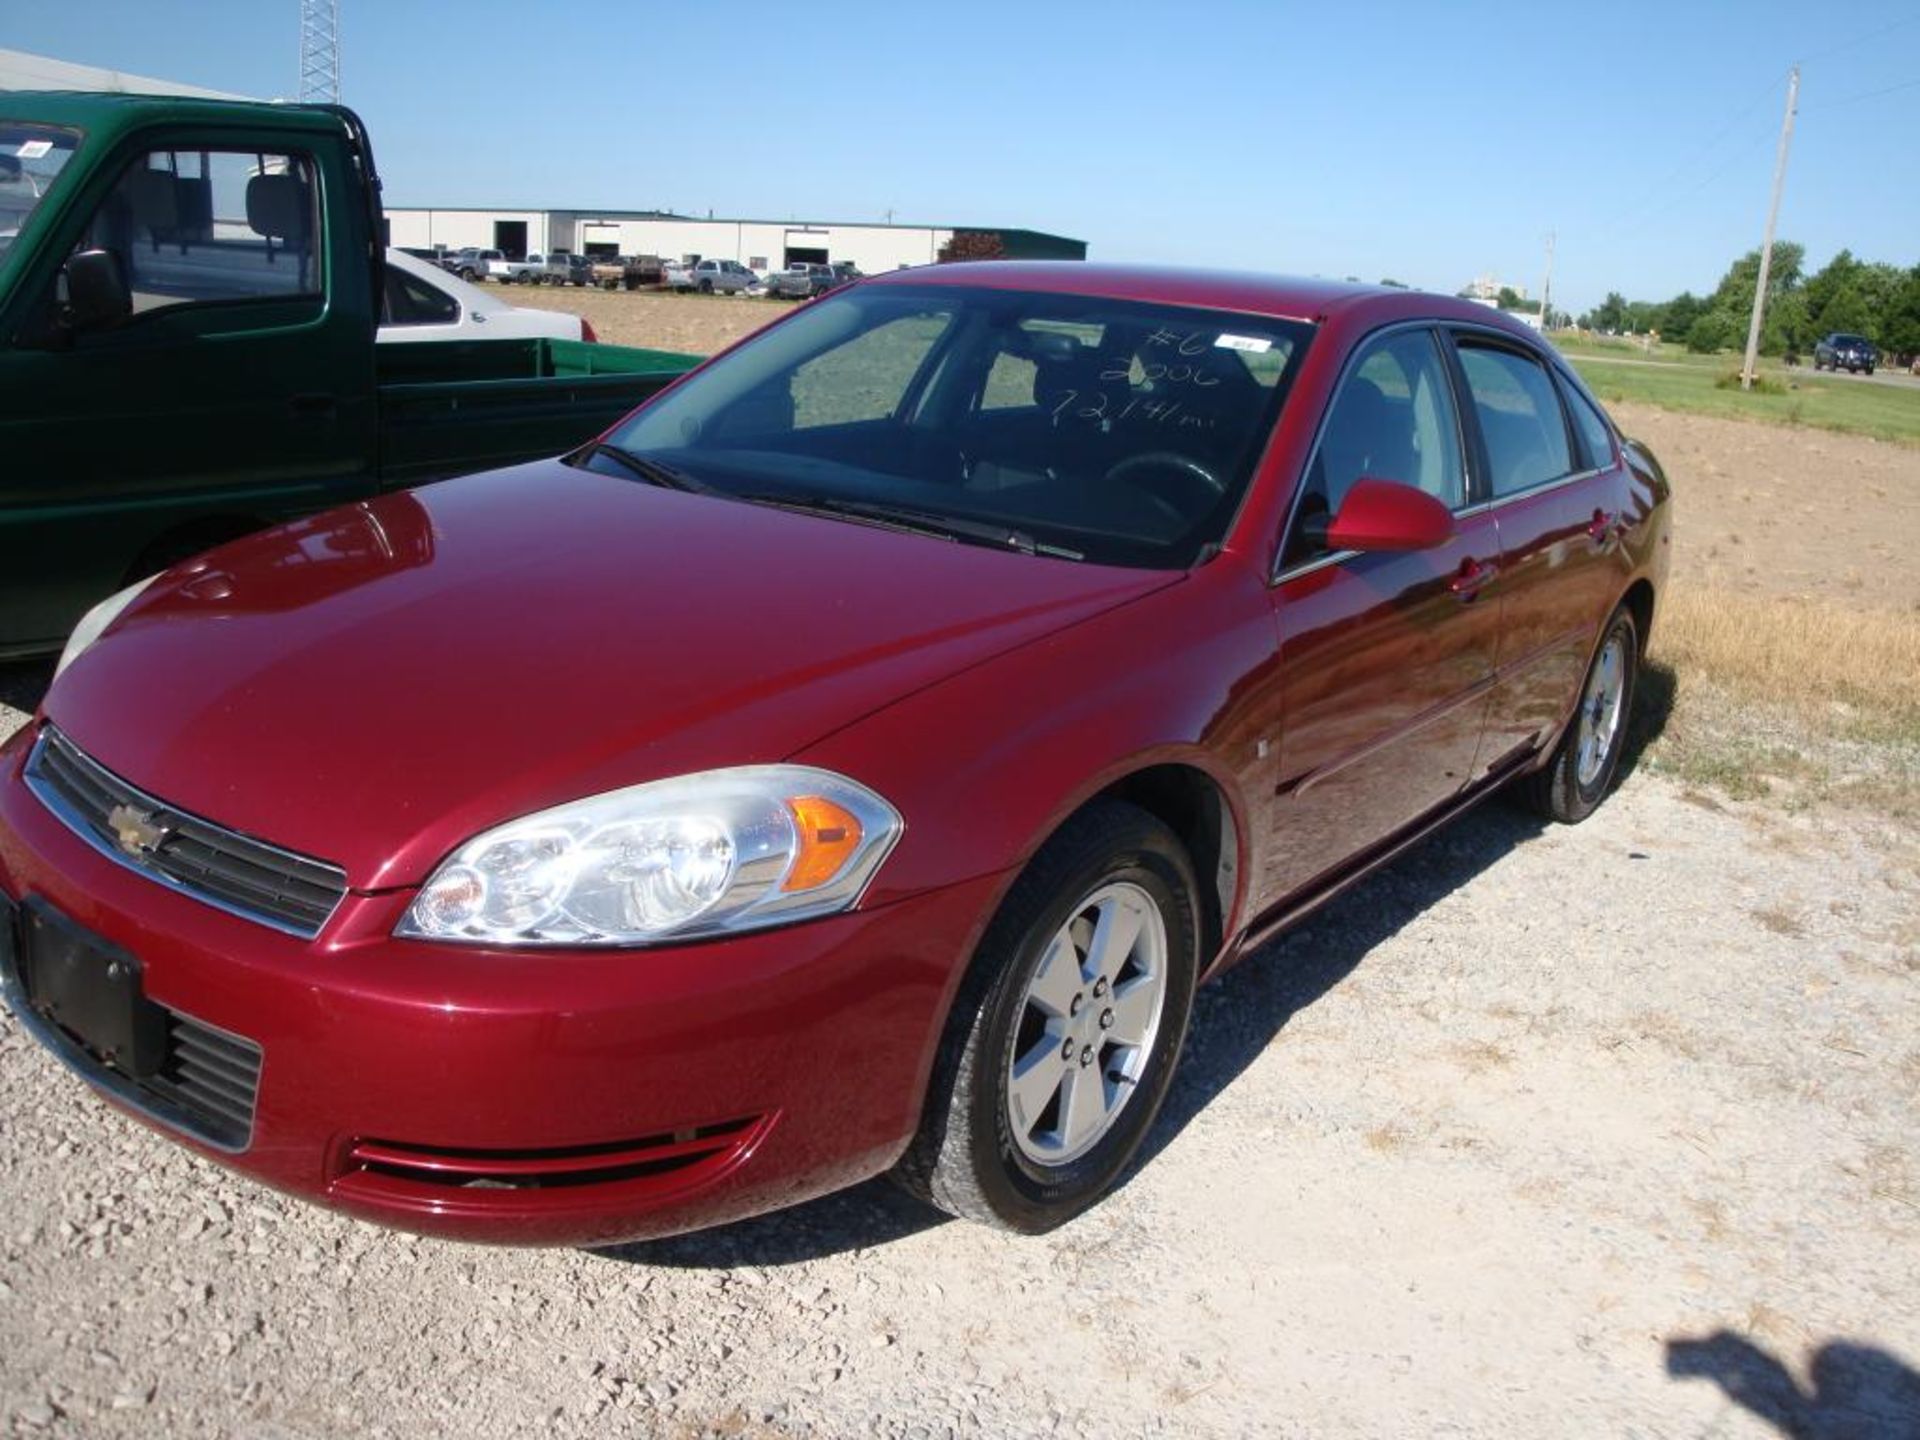 (Title) 2006 Chevrolet Impala,vin 2G1WT58K869365554, 3.5L V6, 72,141 miles